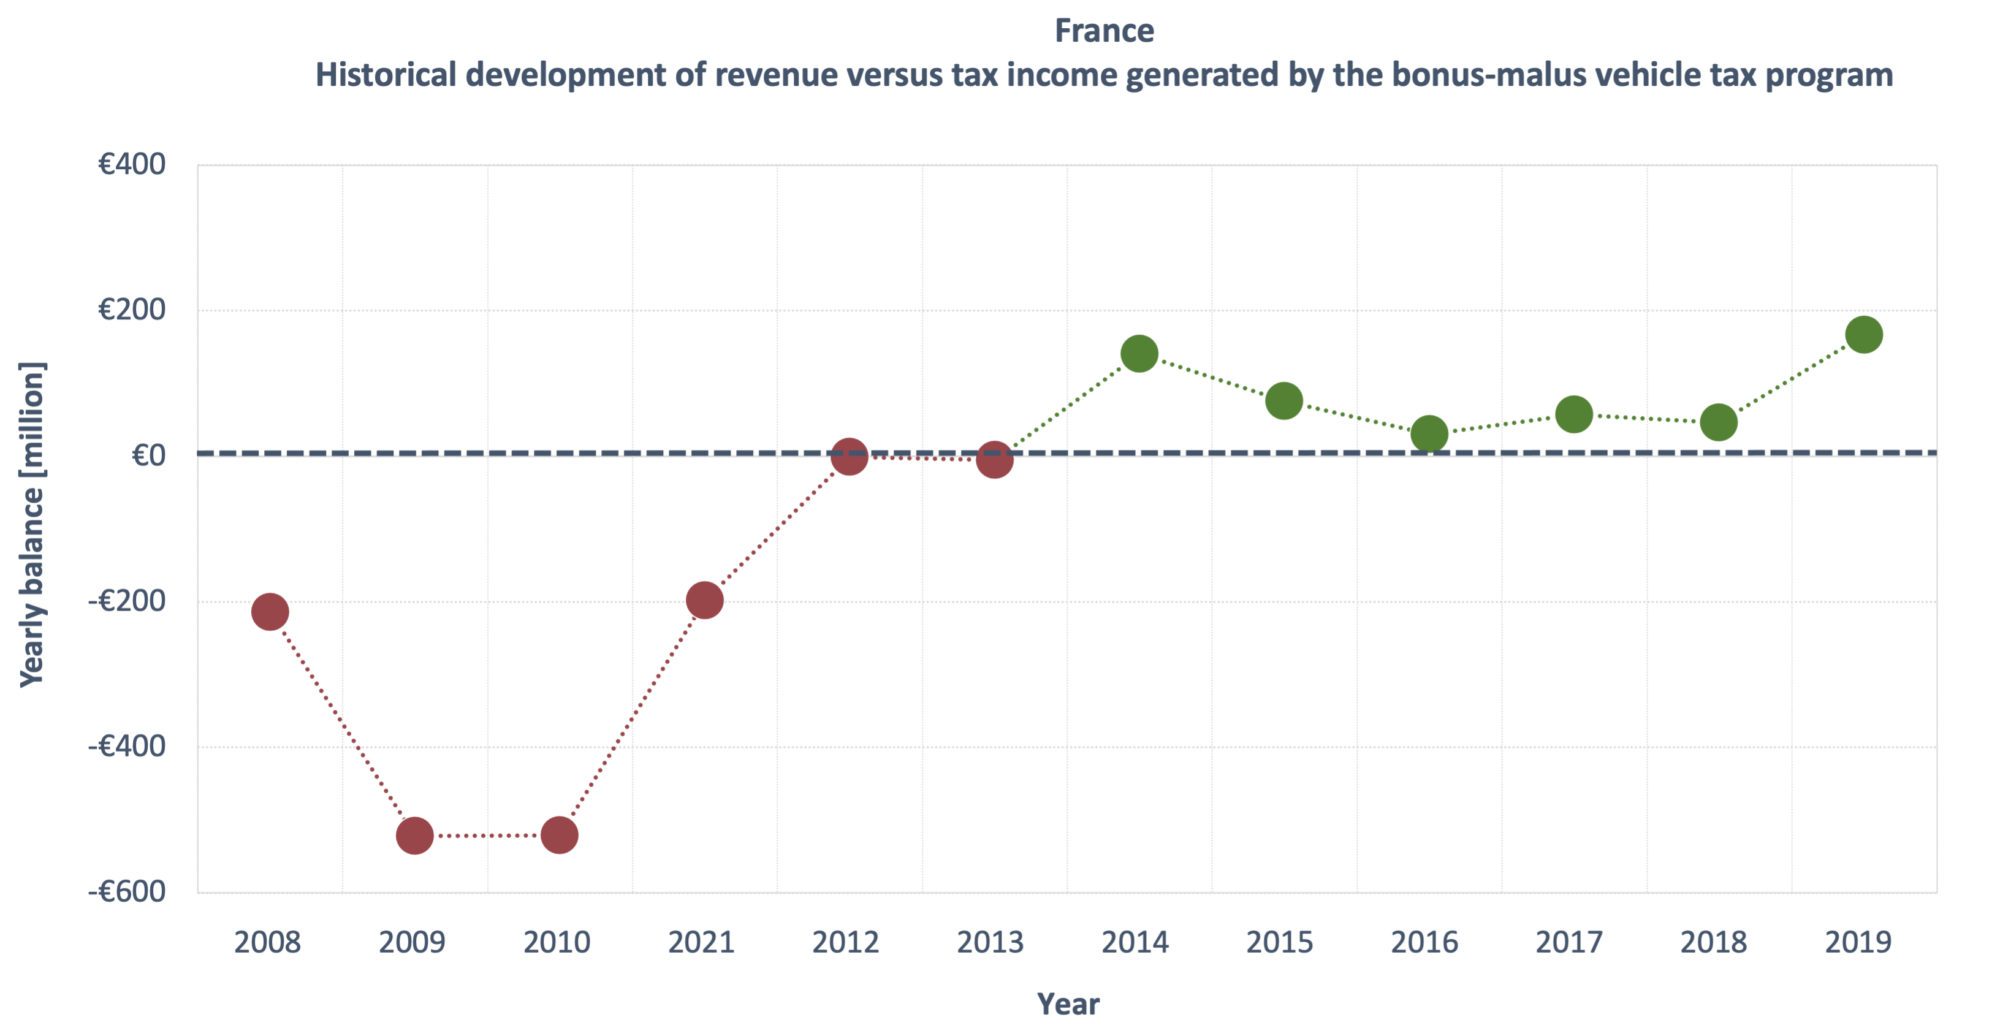 Chart showing budget balance of bonus-malus program in France